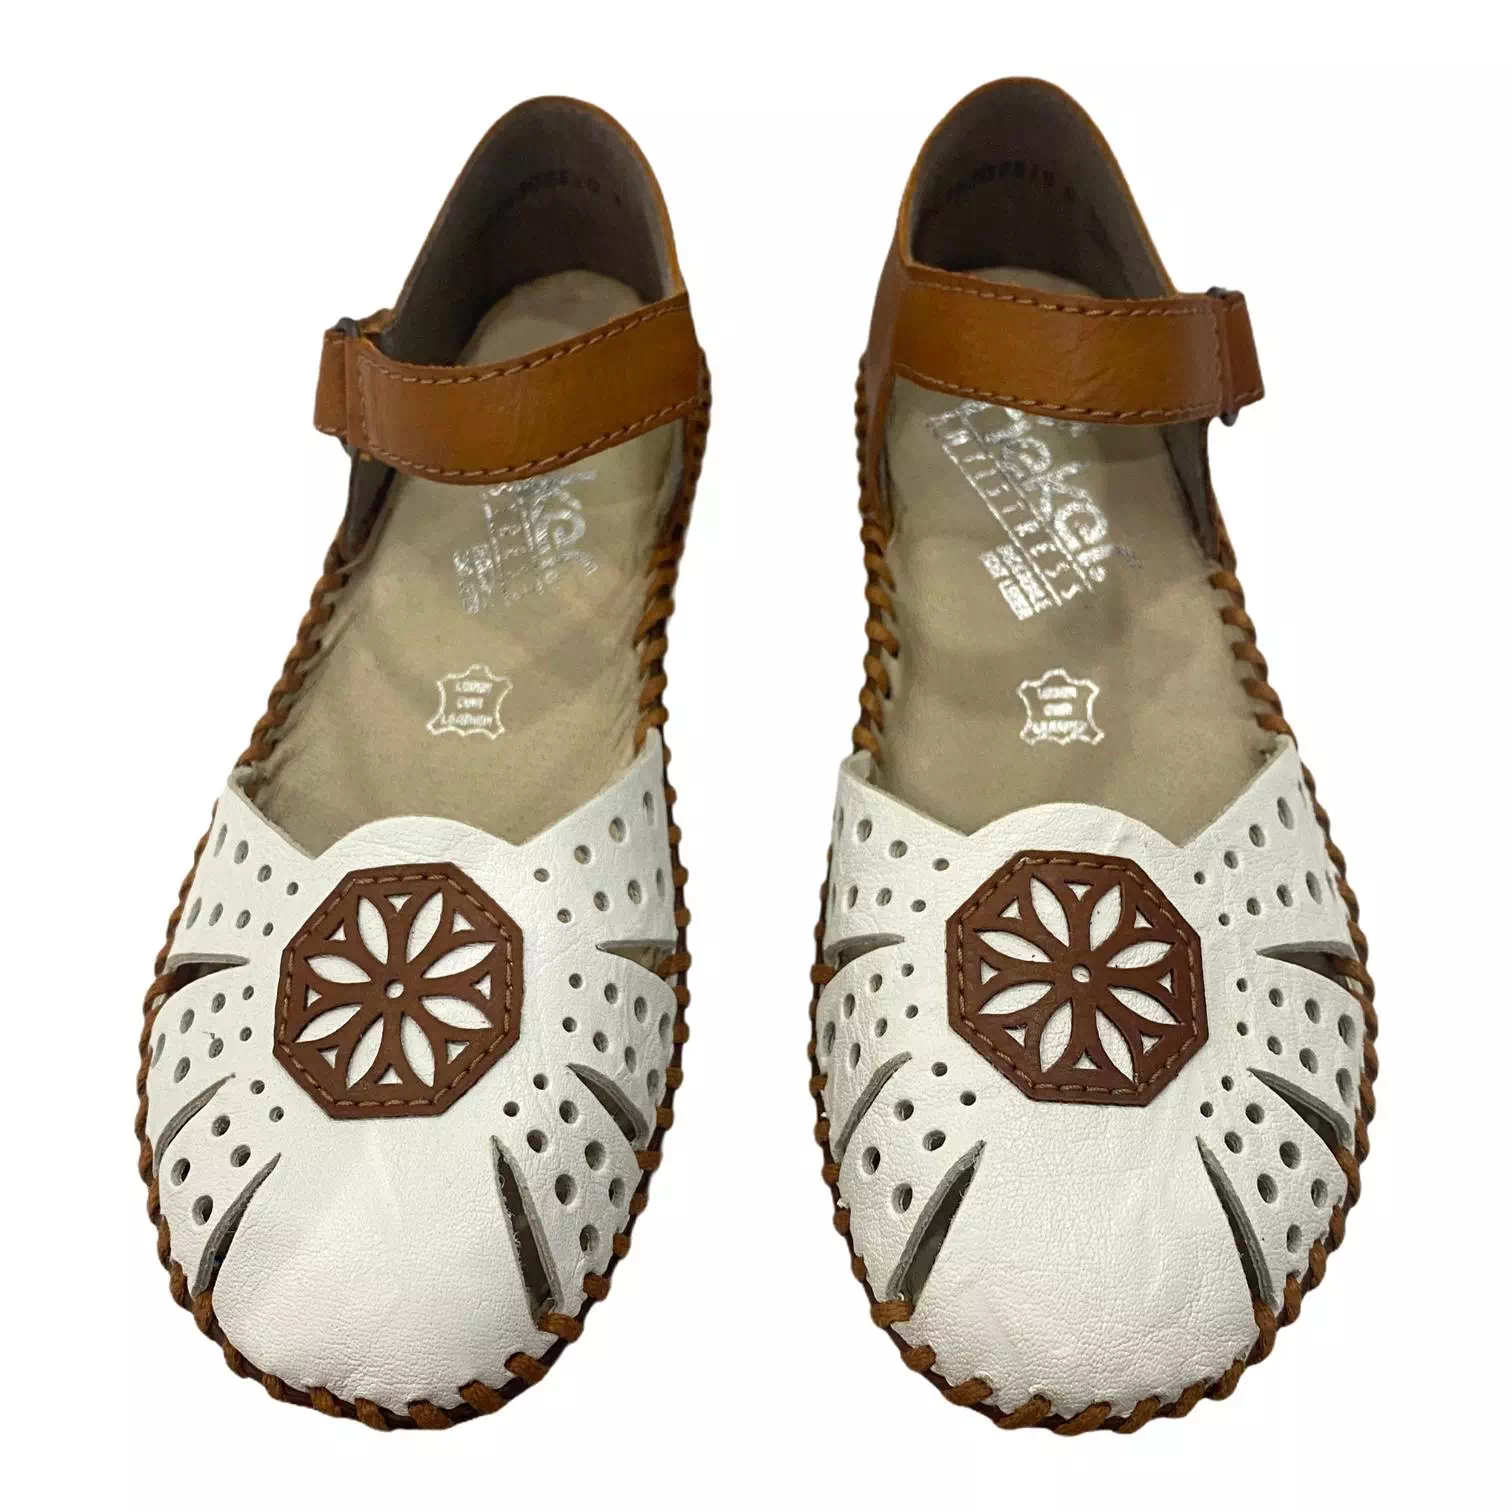 Pantofi Rieker maro combinat cu alb si perforatii